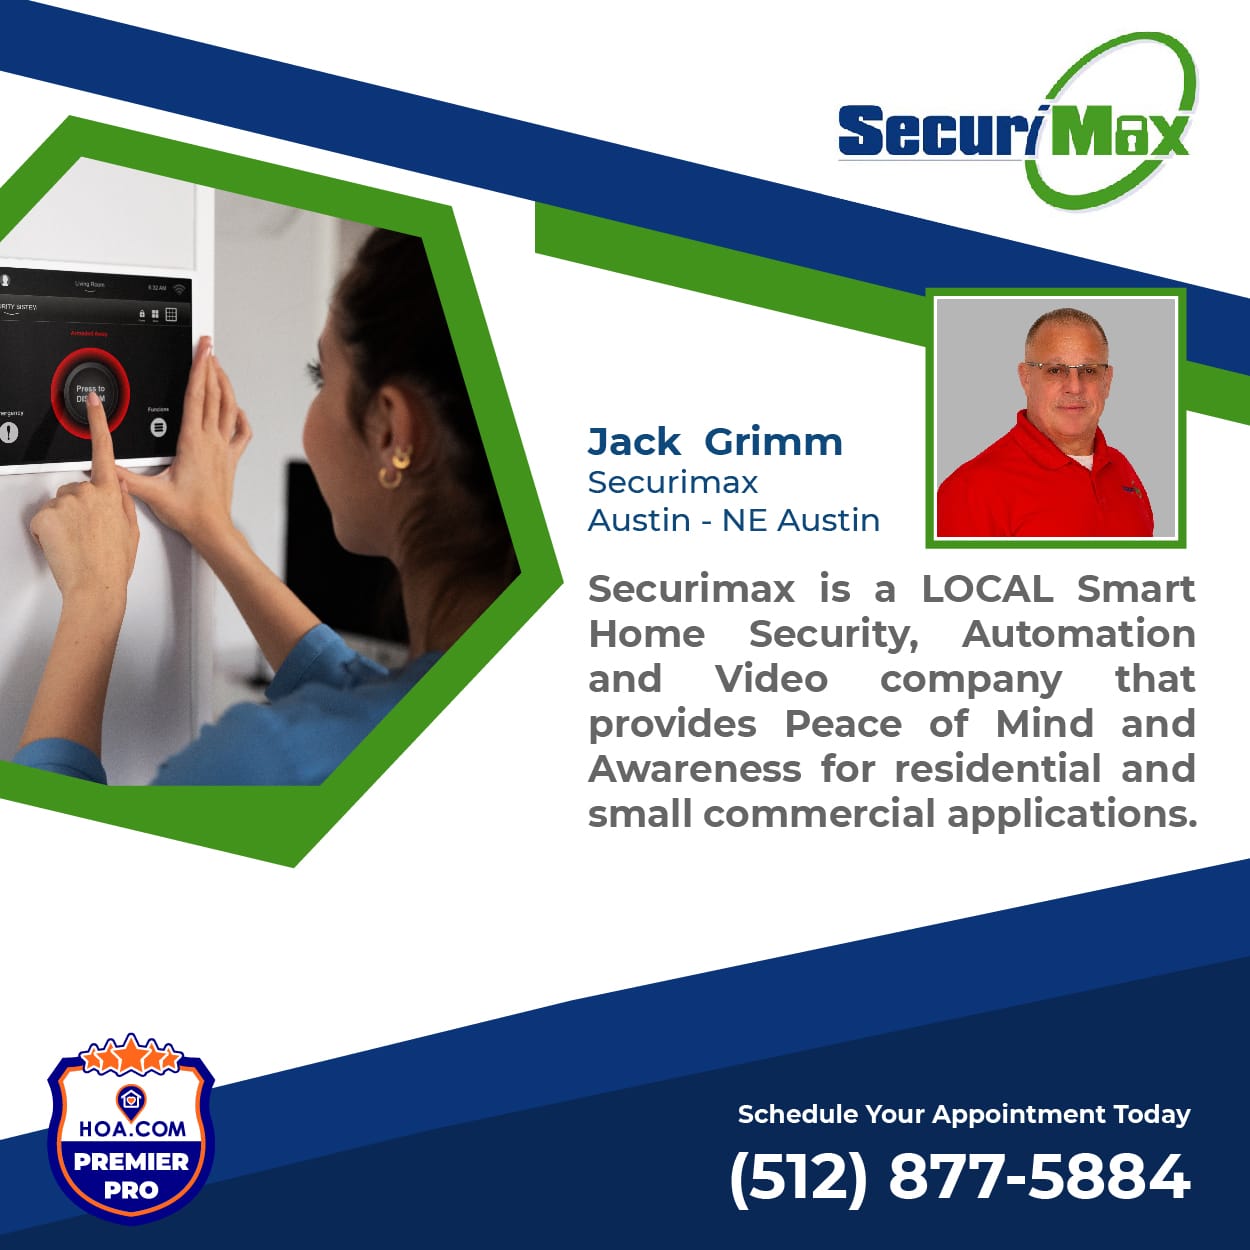 Securimax Jack Grim Austin-NE Austin